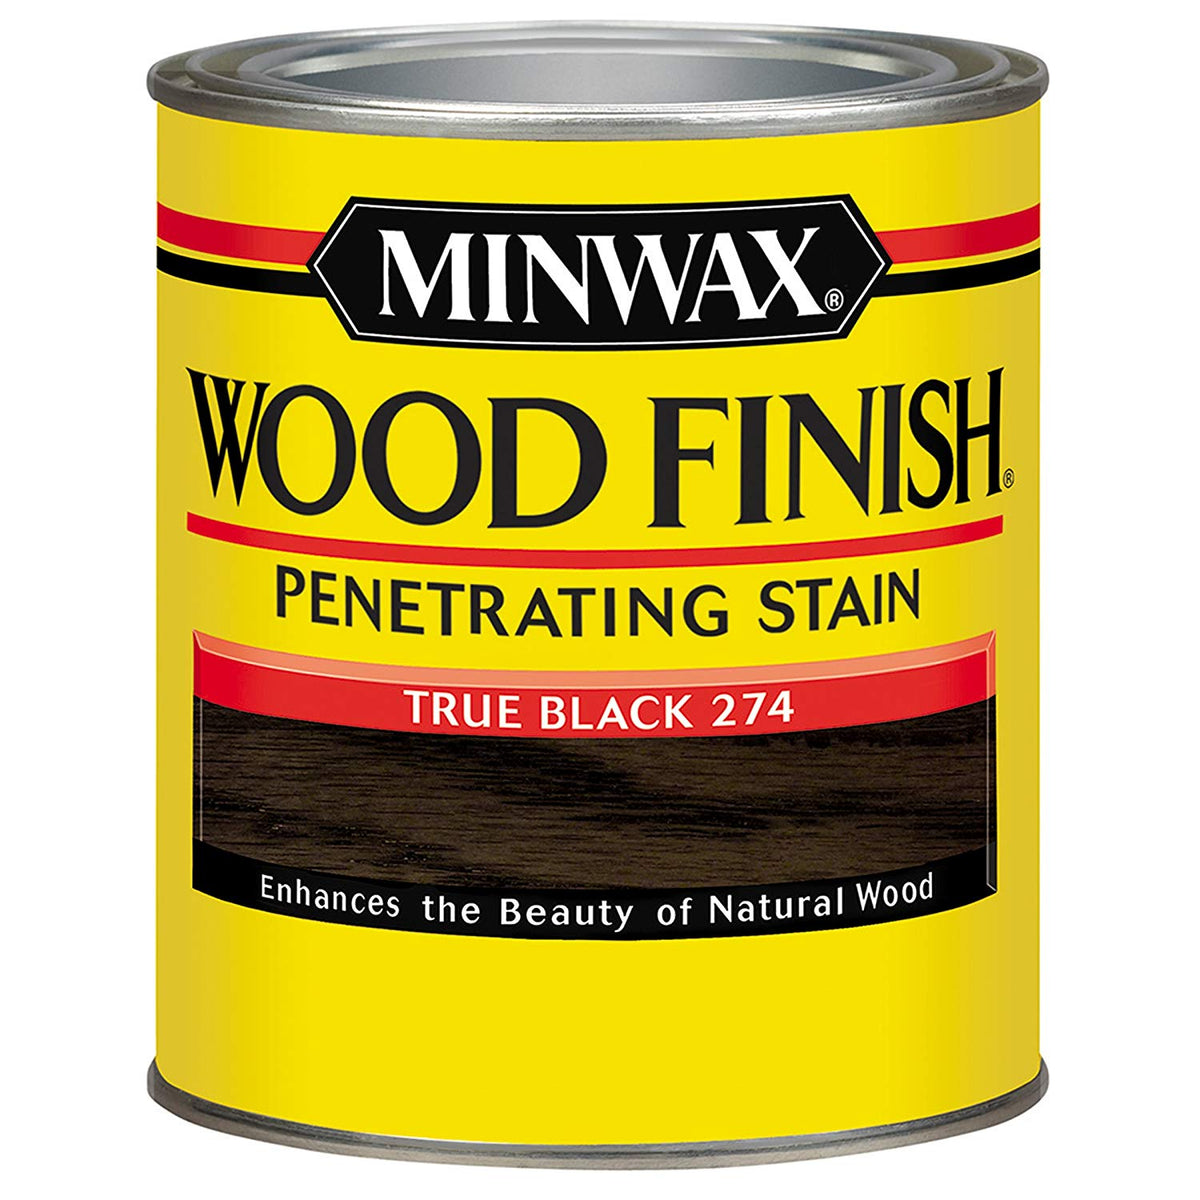 Minwax 227644444 Wood Finish Penetrating Oil-Based Stain, True Black, 1/2 Pint